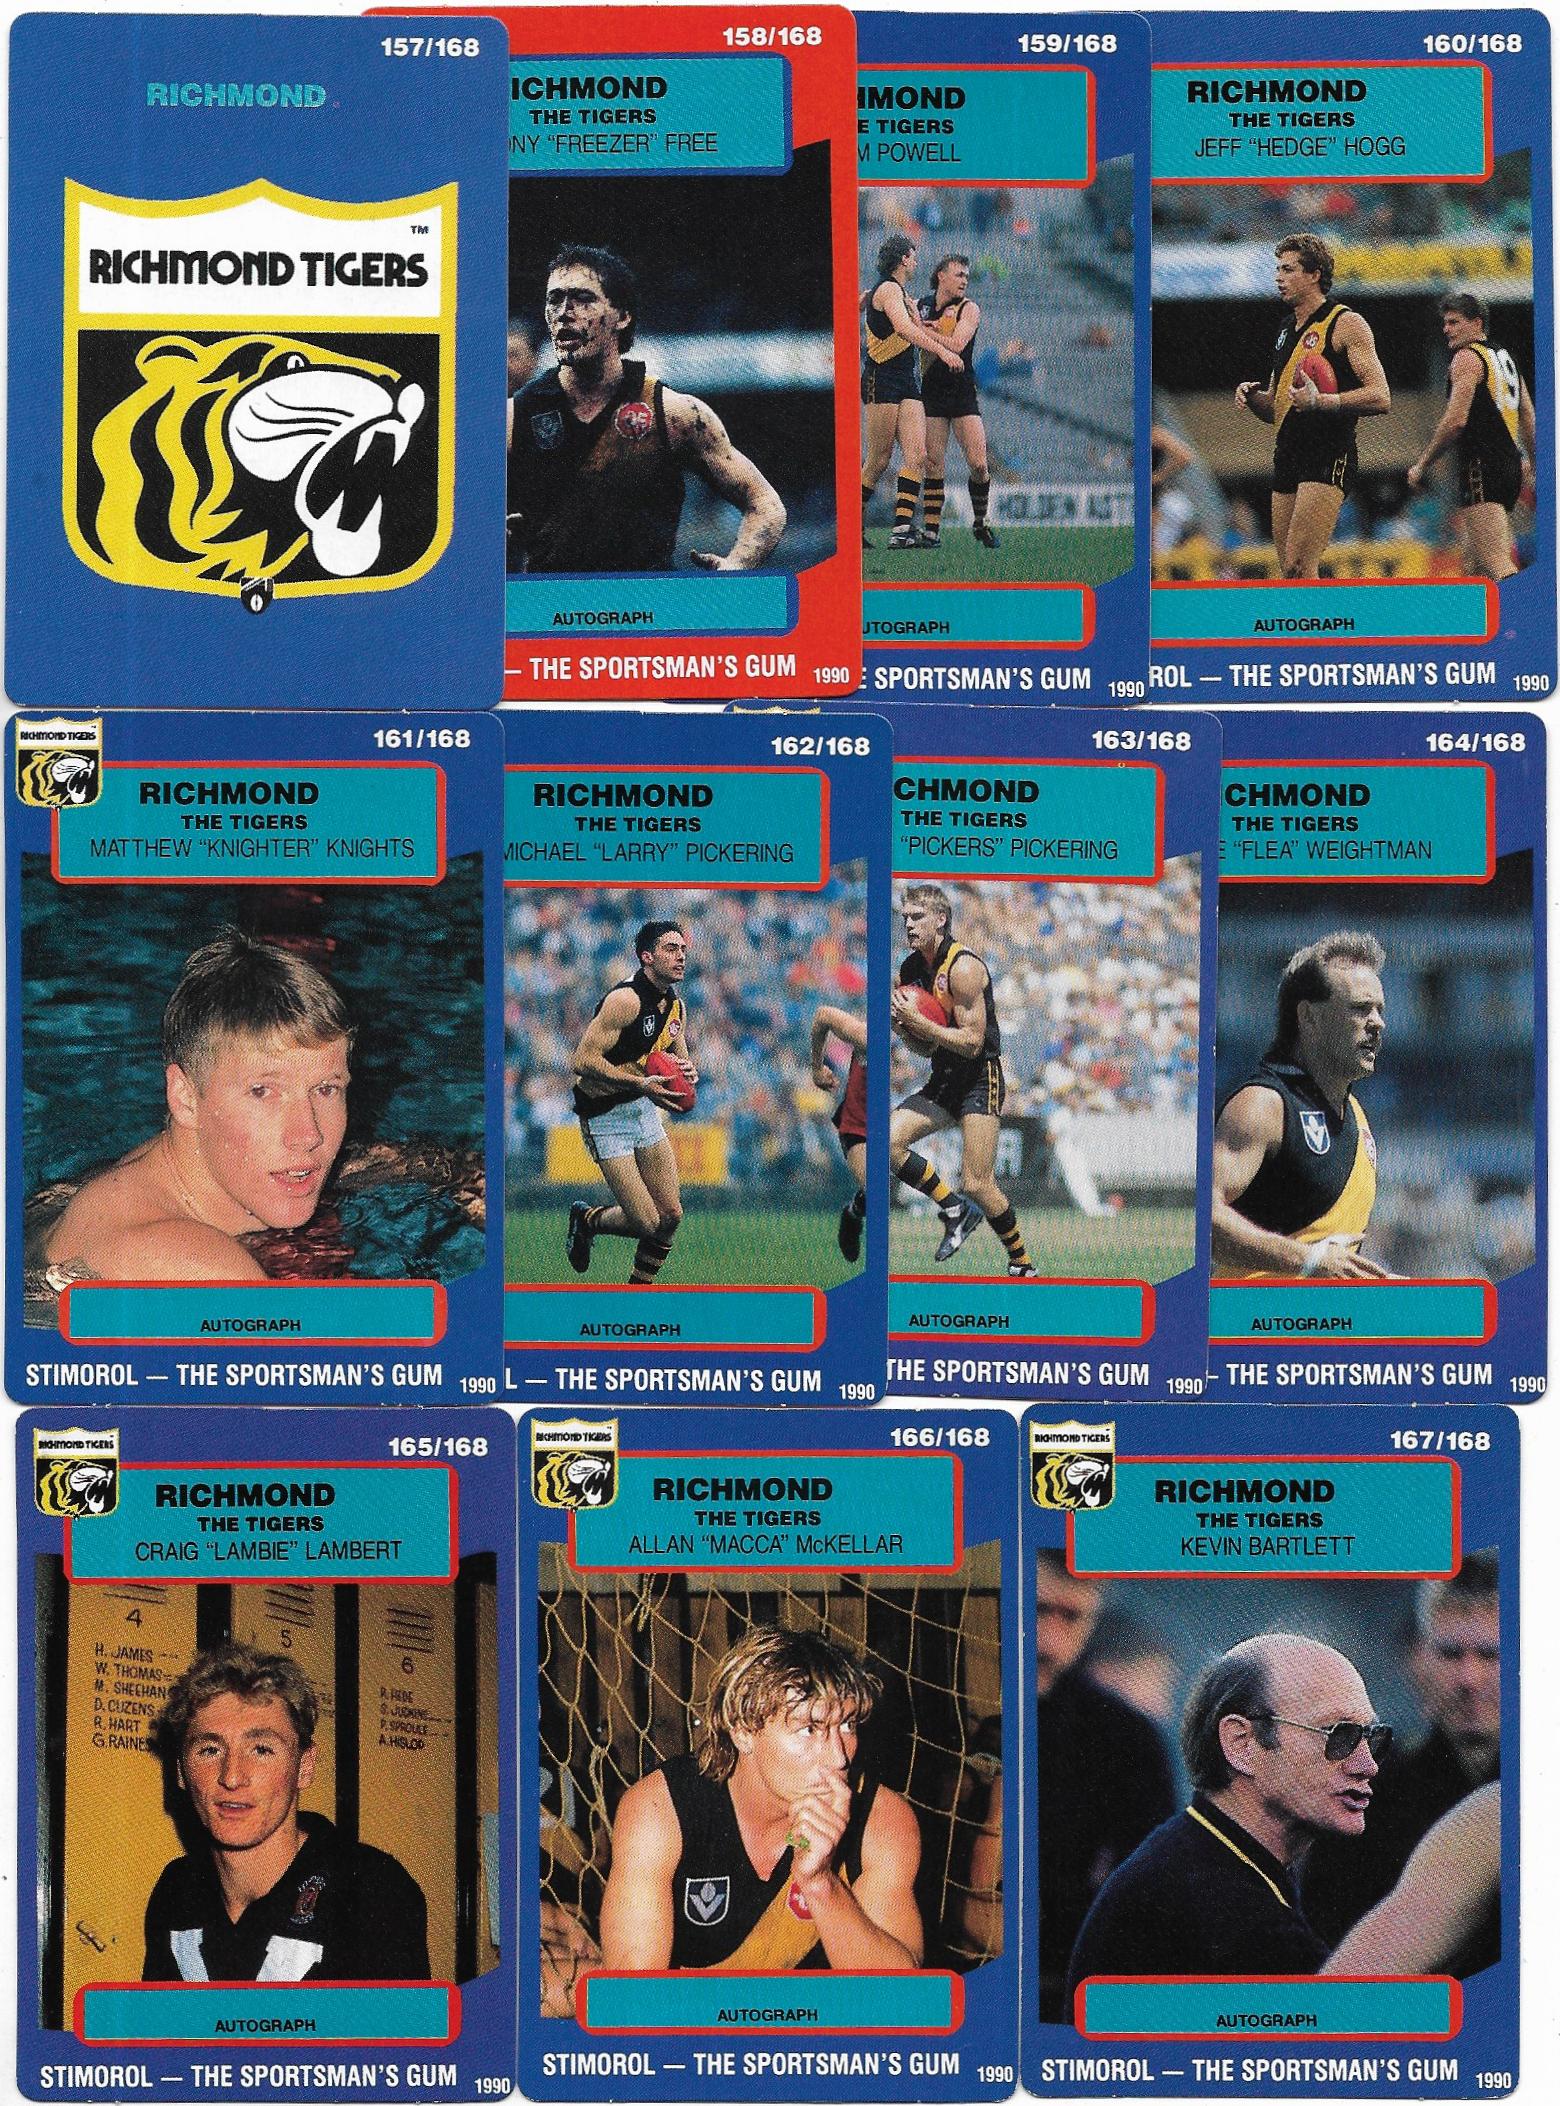 1990 Stimorol Team Set – Richmond